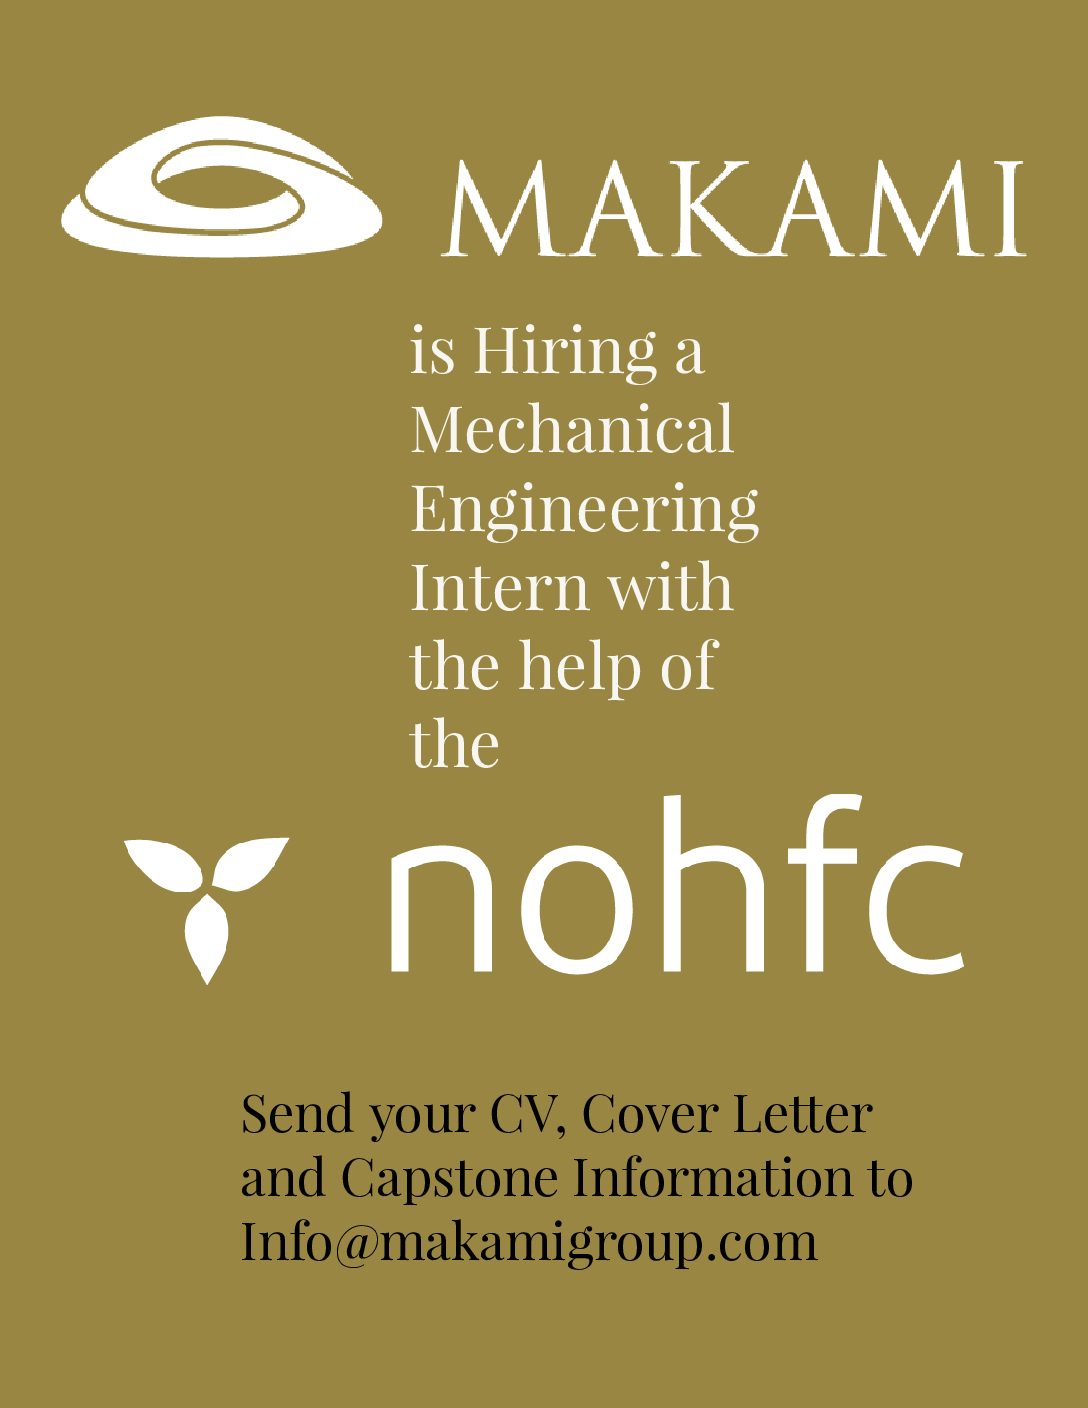 We are hiring a Mechanical Engineering Intern – Immediately –